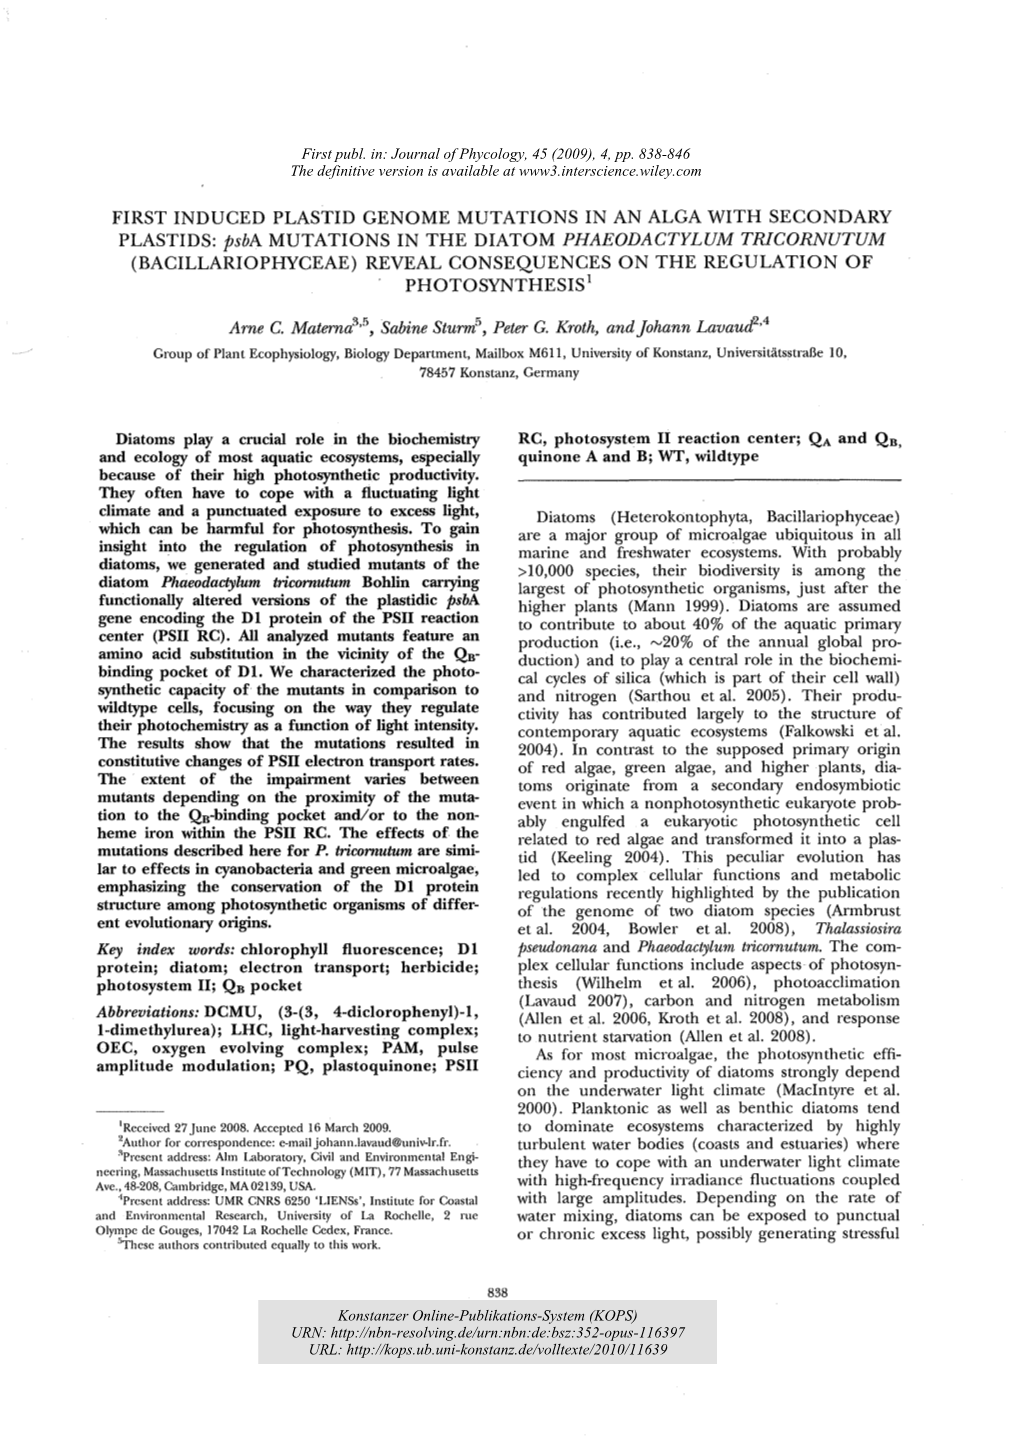 Psba MUTATIONS in the DIATOM PHAEODACTYLUM TRICORNUTUM (BACILLARIOPHYCEAE) REVEAL CONSEQUENCES on the REGULATION of PHOTOSYNTHESIS1